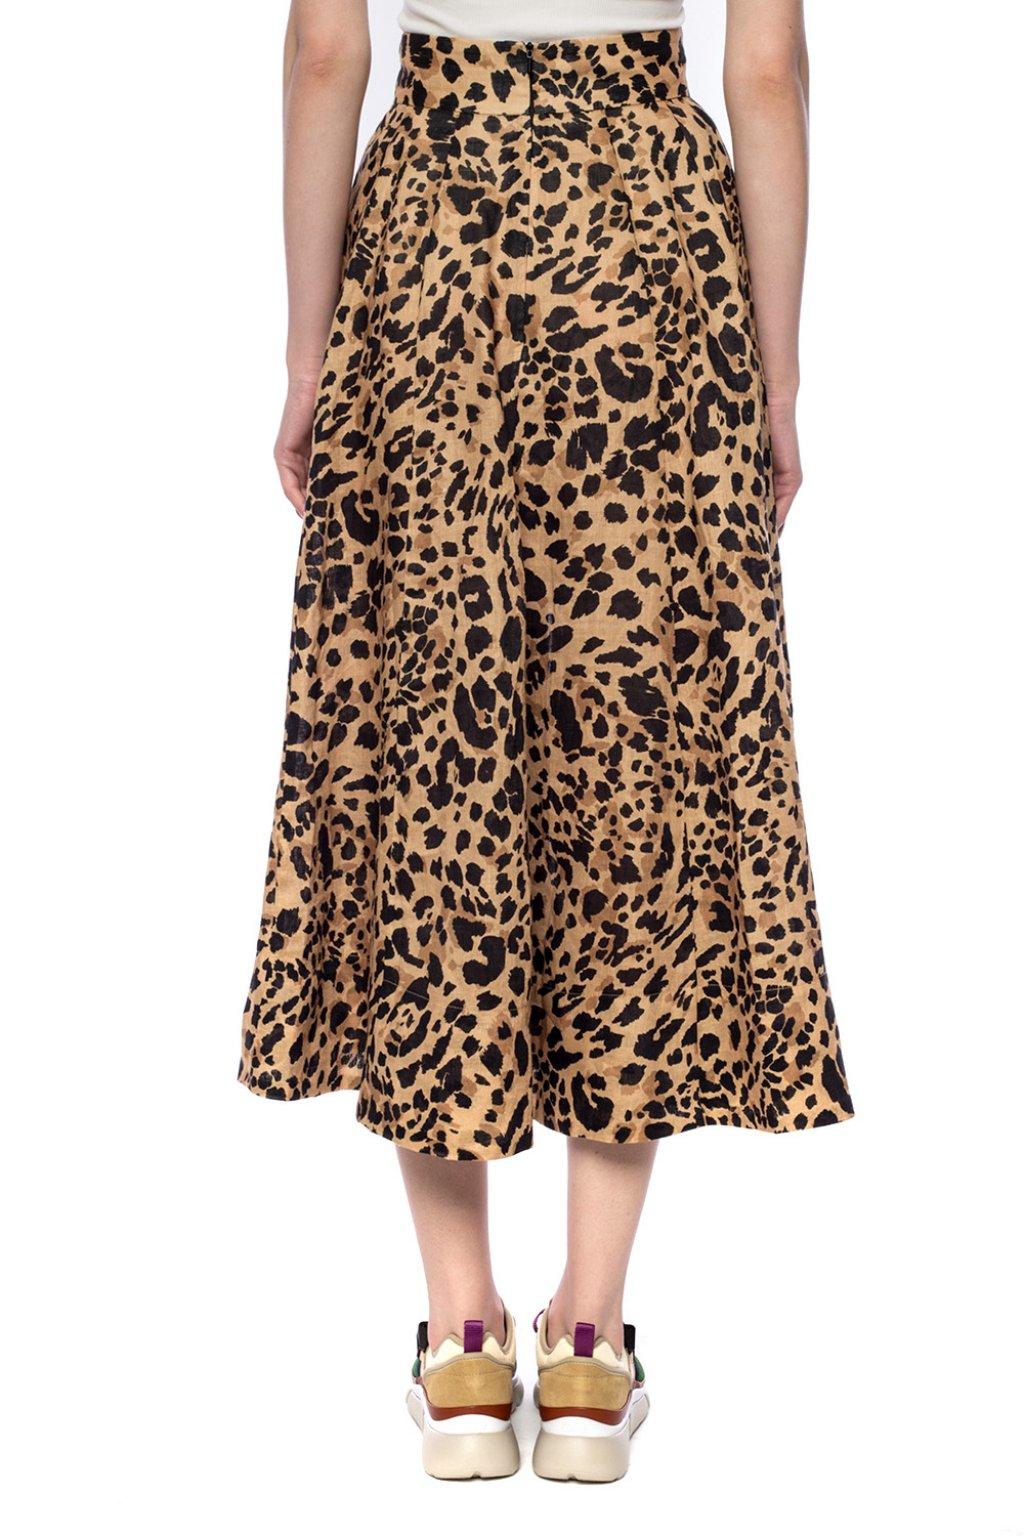 Zimmermann Leopard-printed Skirt in Brown - Lyst